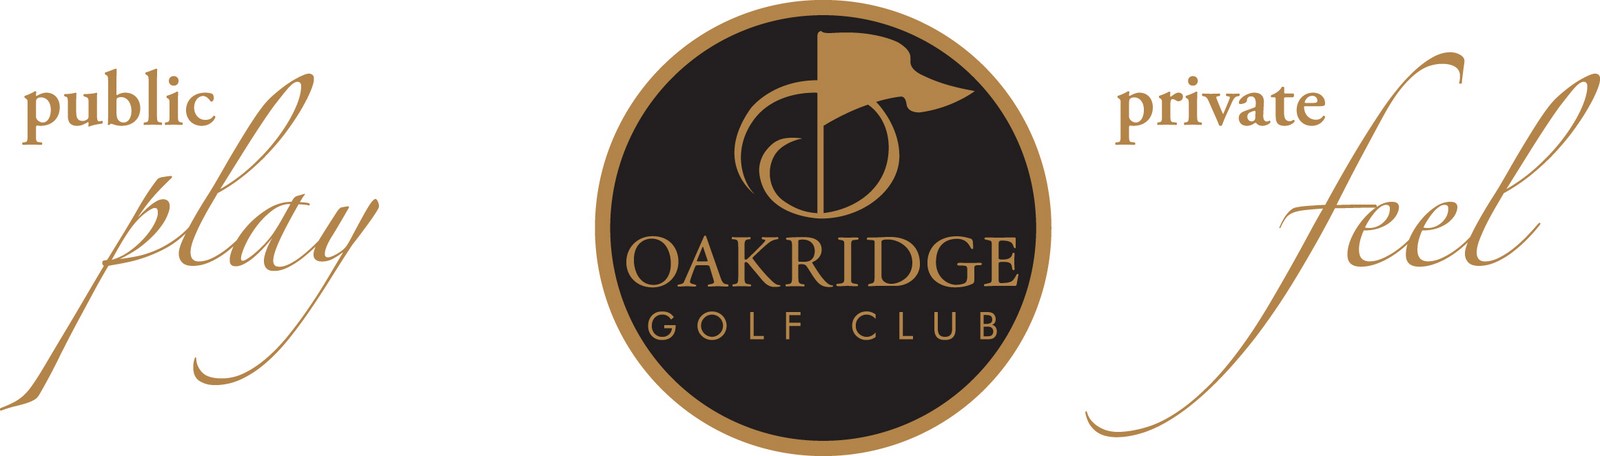 2019 Oakridge Brand Marketing Public Play Private Feel Logo